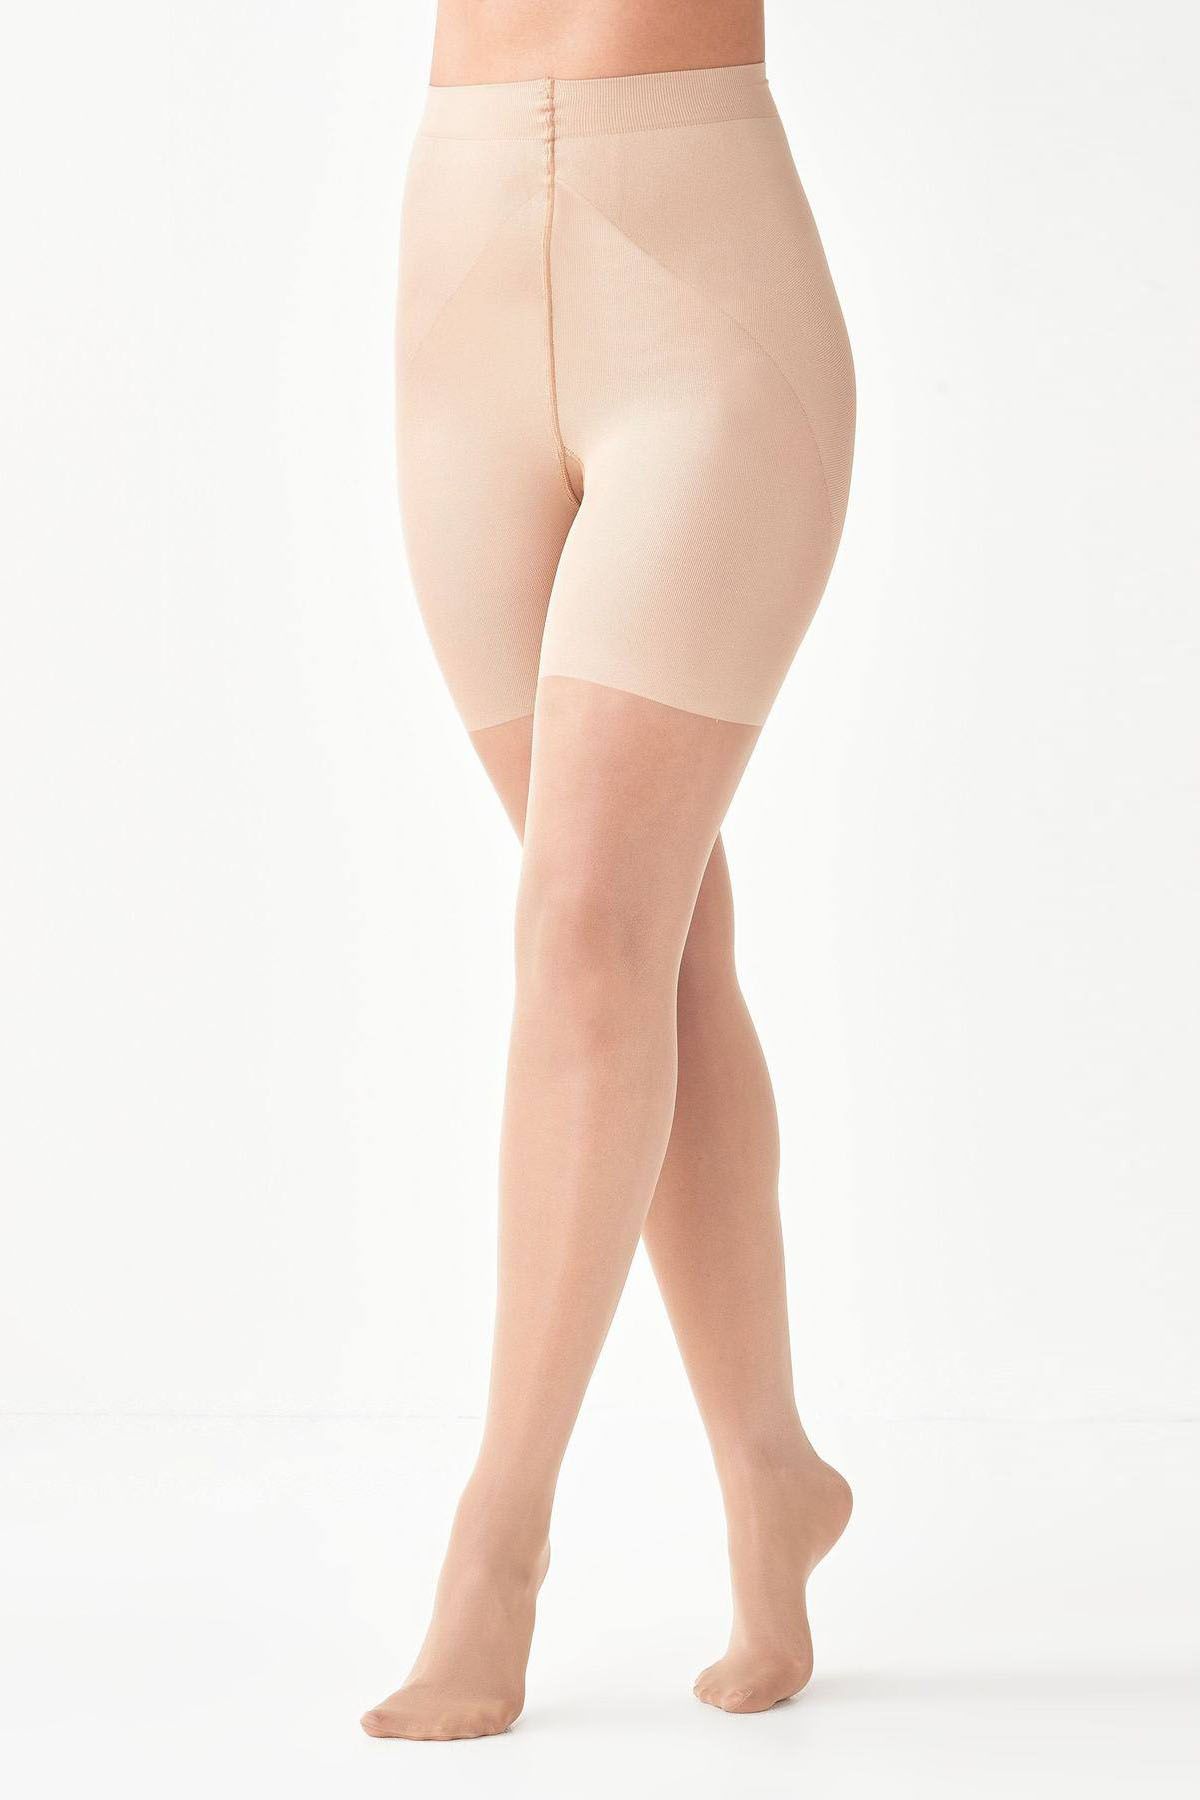 NEXT Bum/Tum/Thigh Gloss Shaping 20 Denier Tights Nude Women Tights